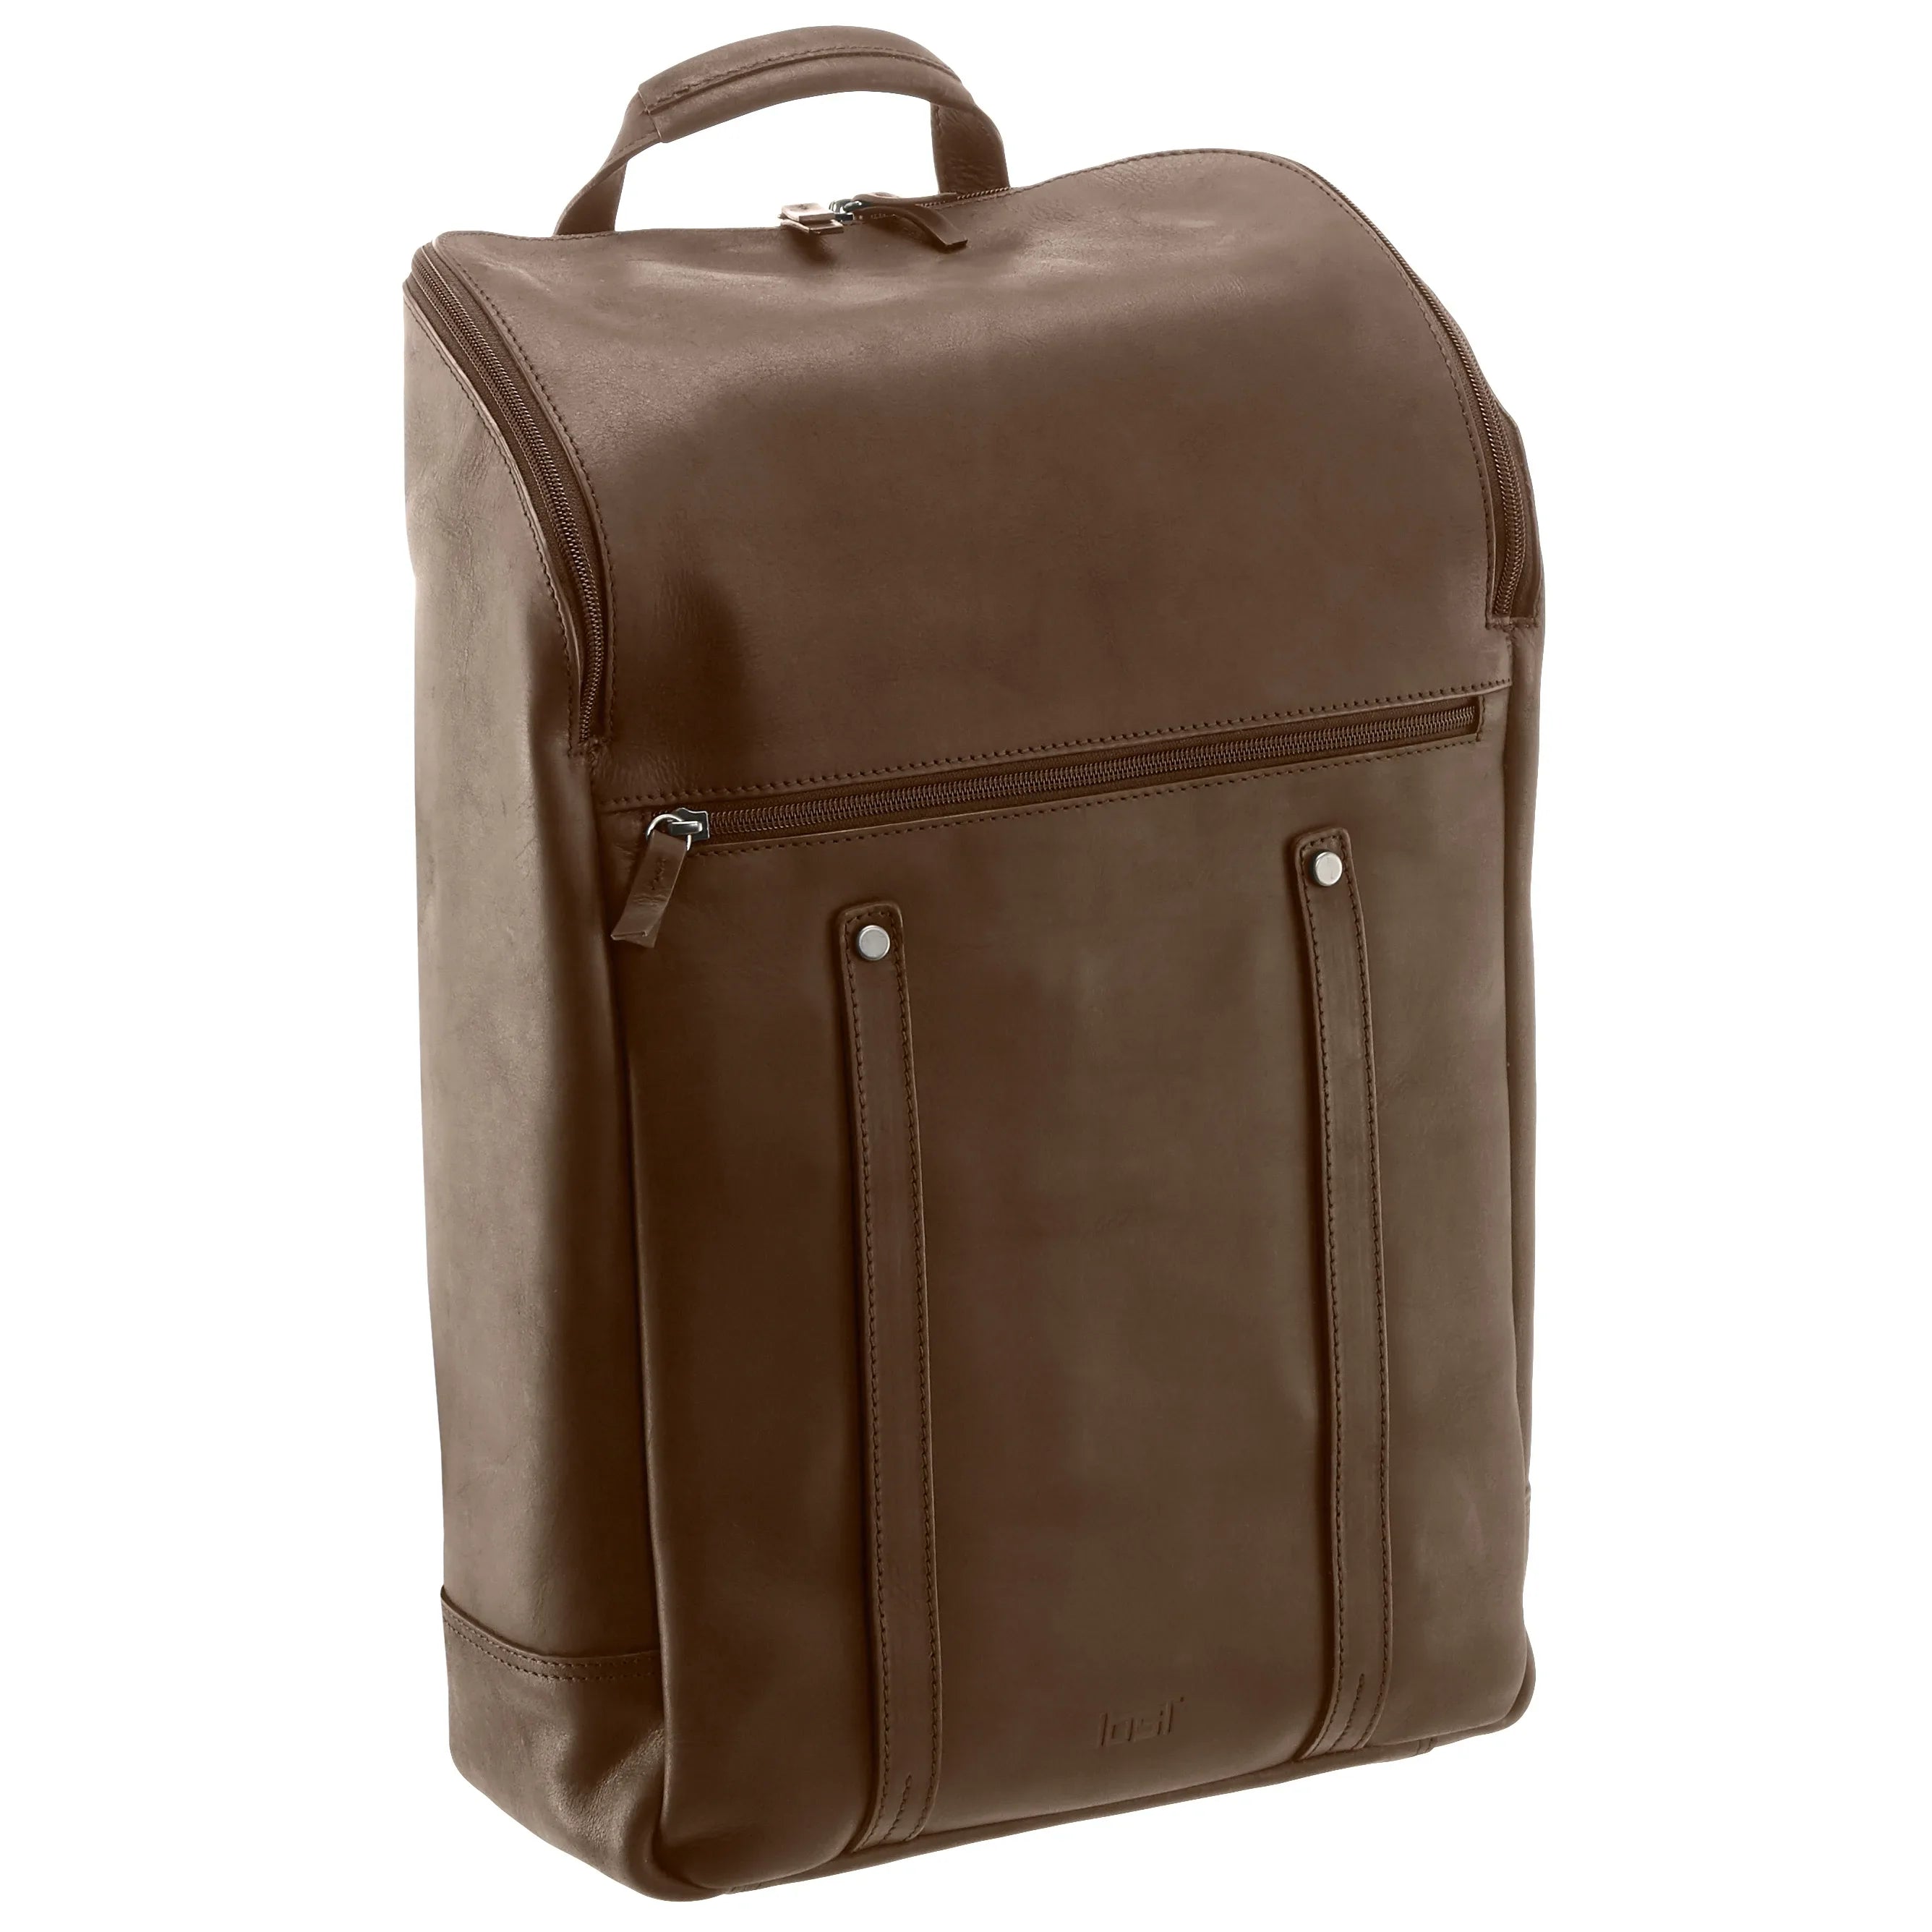 Jost Salo laptop backpack 45 cm - brown